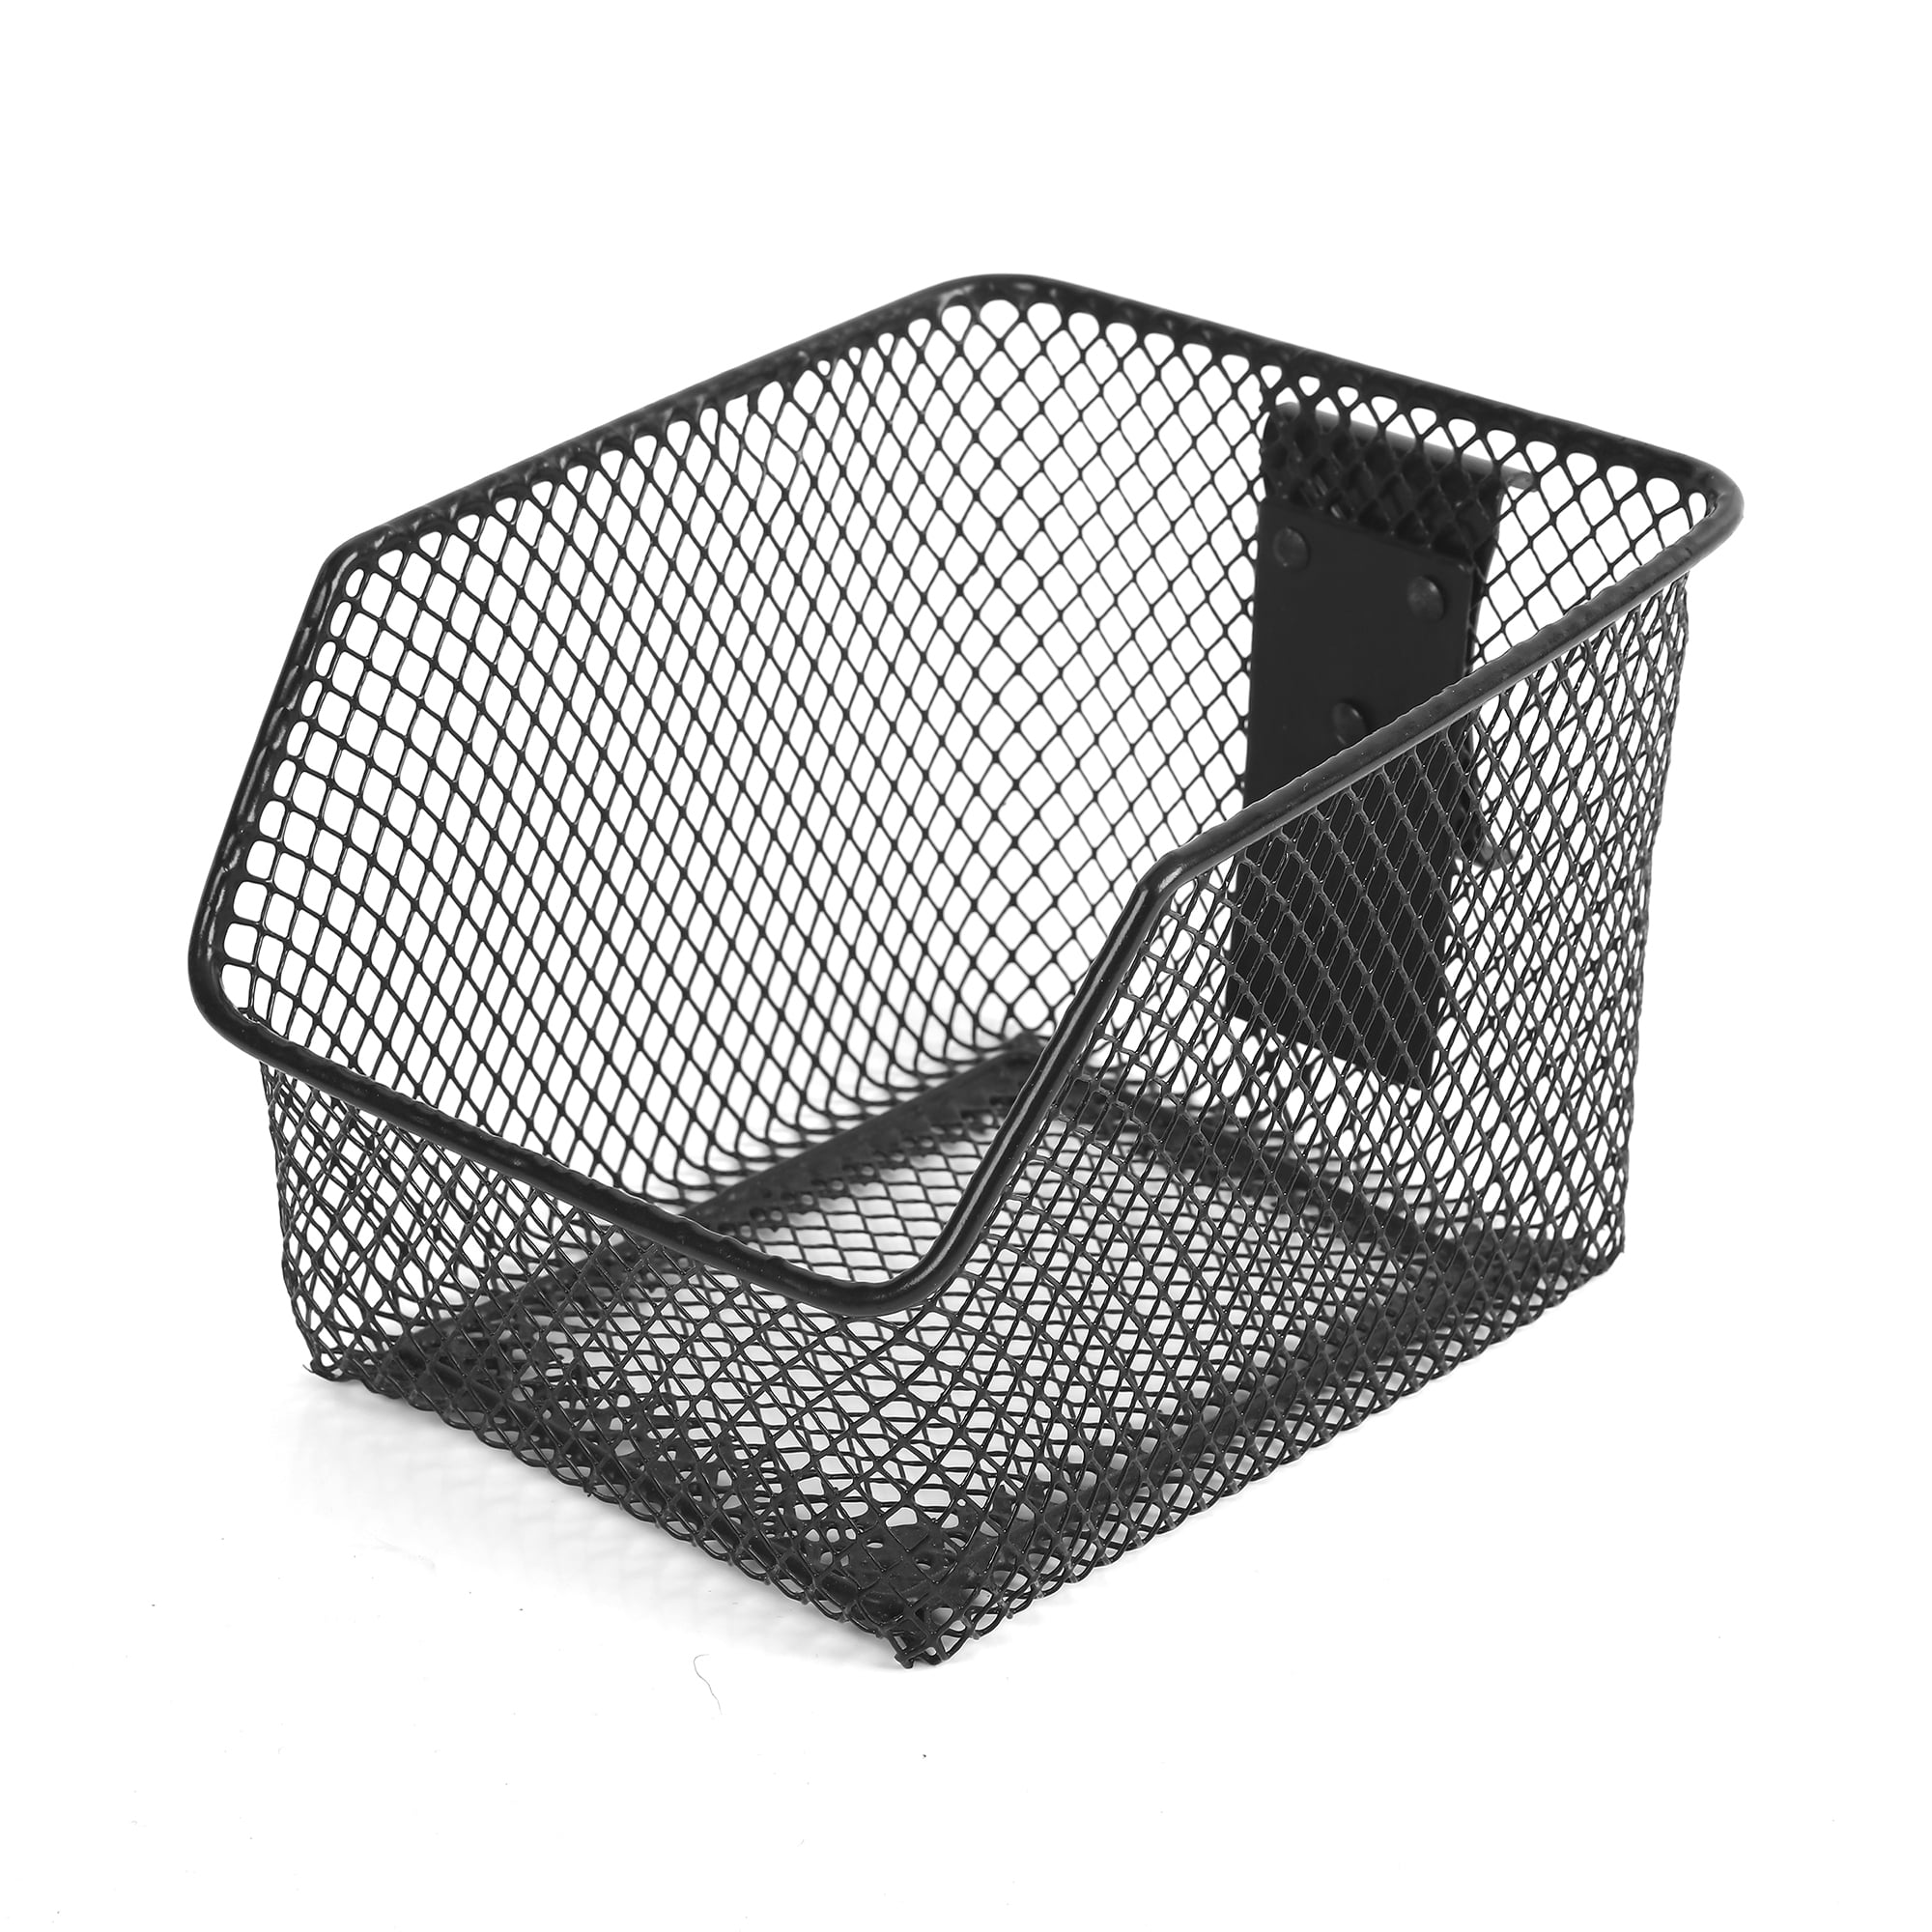 Hyper Tough 6 1/2-inch Metal Mesh Basket for Snap Rail System, Black